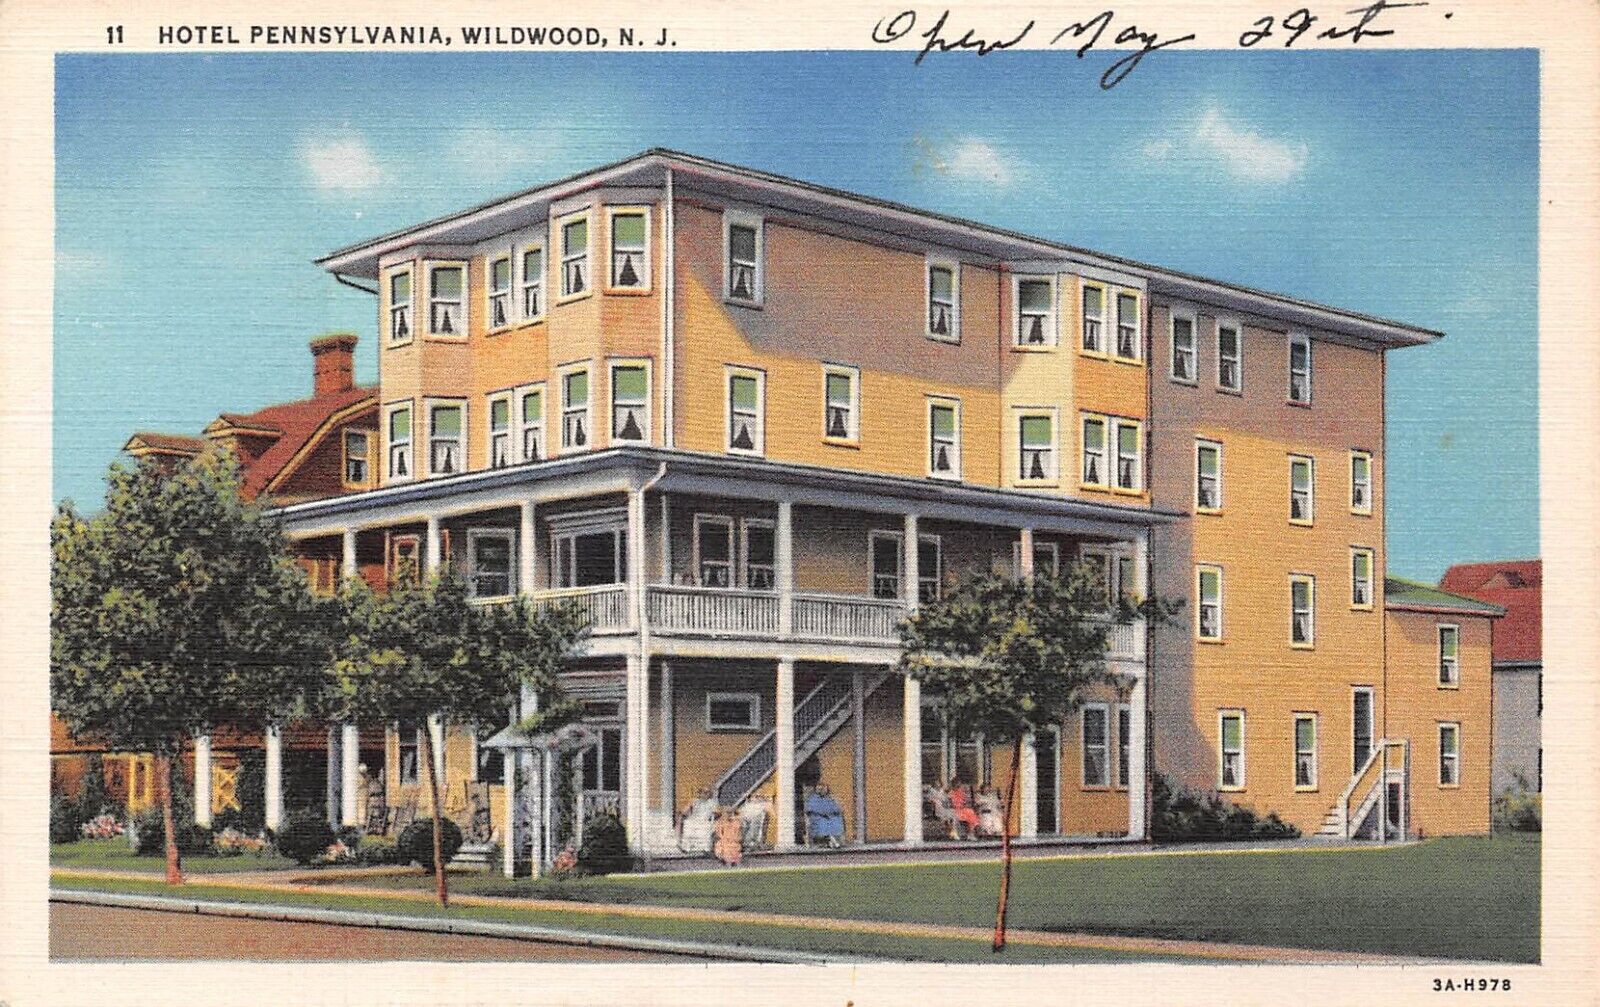 The Pennsylvania Hotel Wildwood New Jersey c1930 Postcard